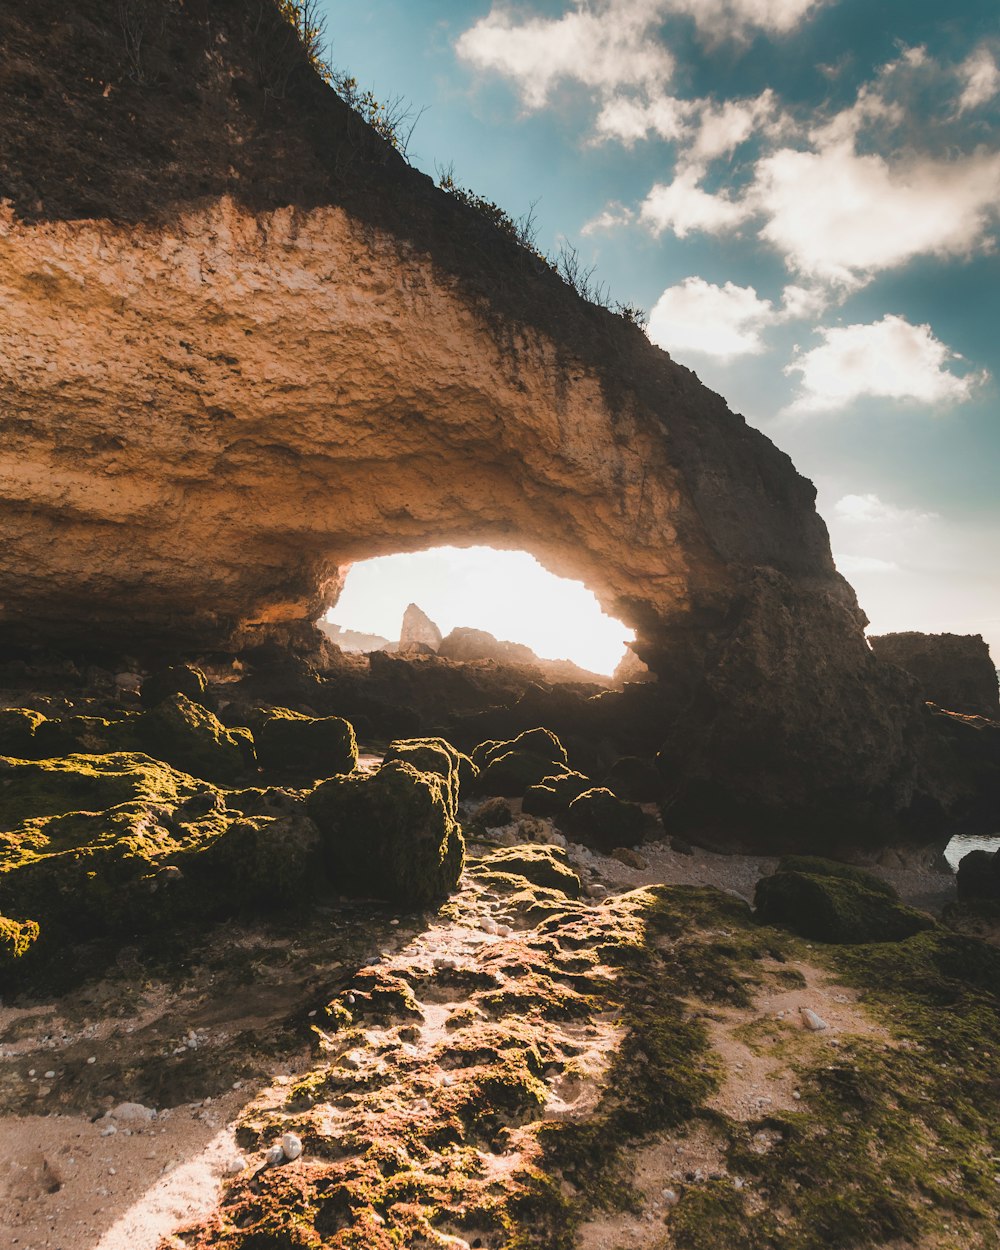 the sun is shining through a cave on the beach